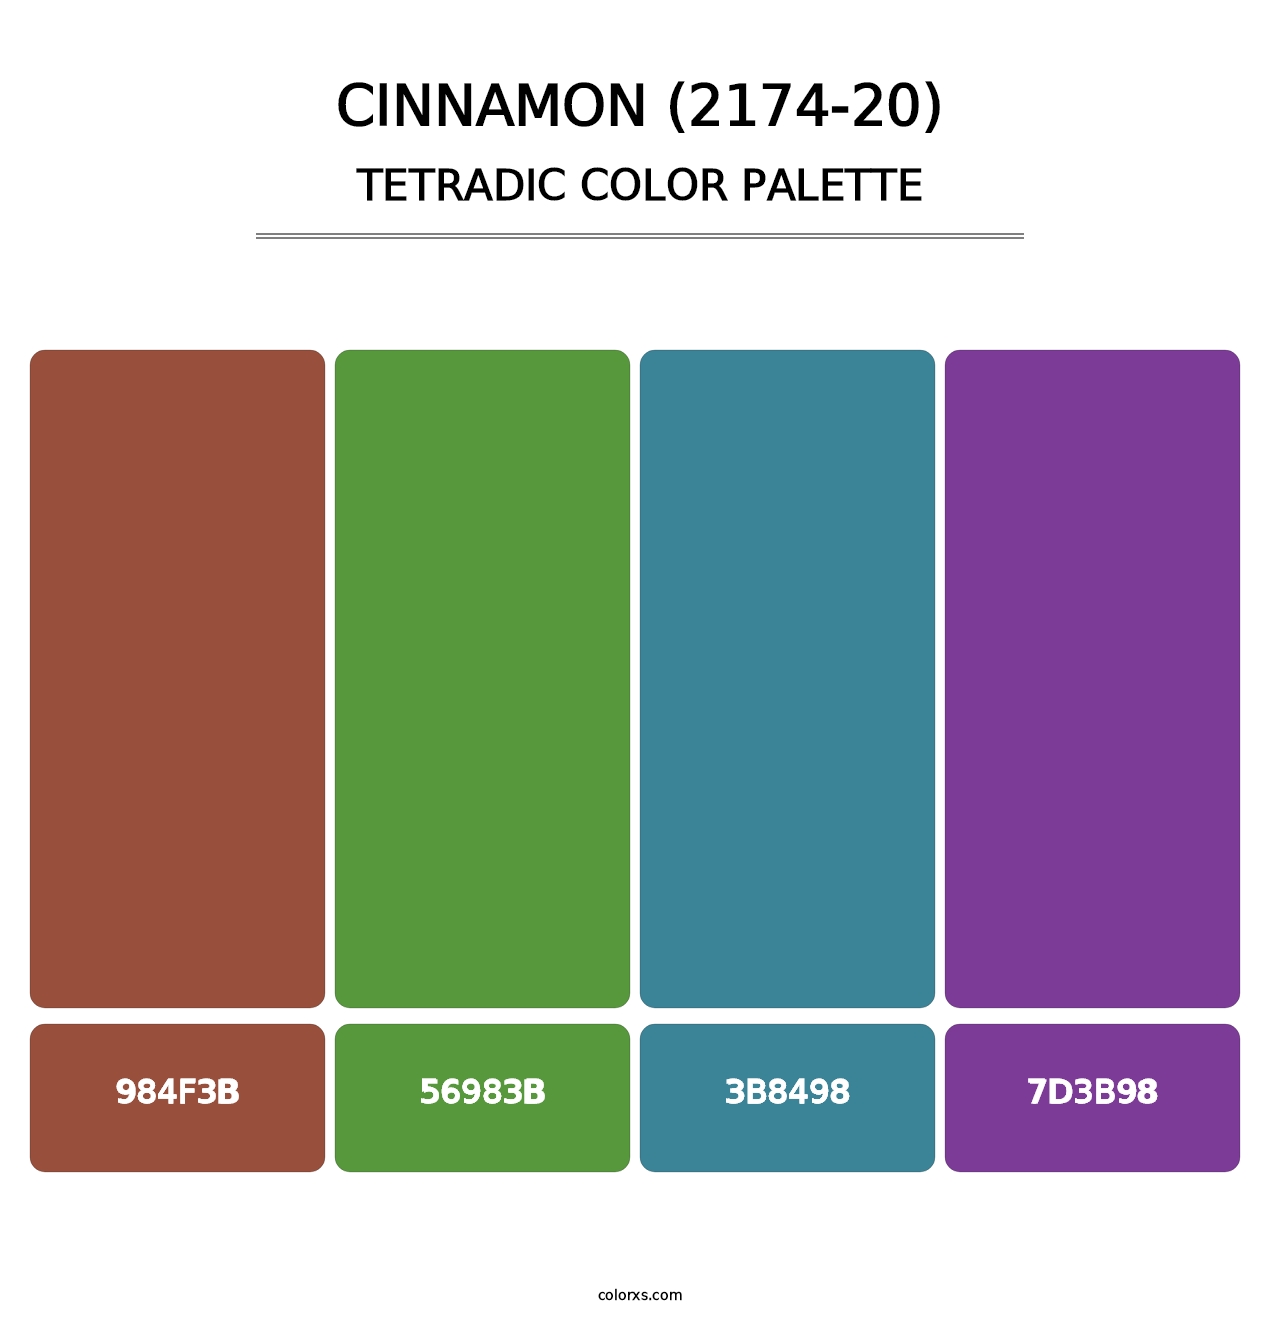 Cinnamon (2174-20) - Tetradic Color Palette